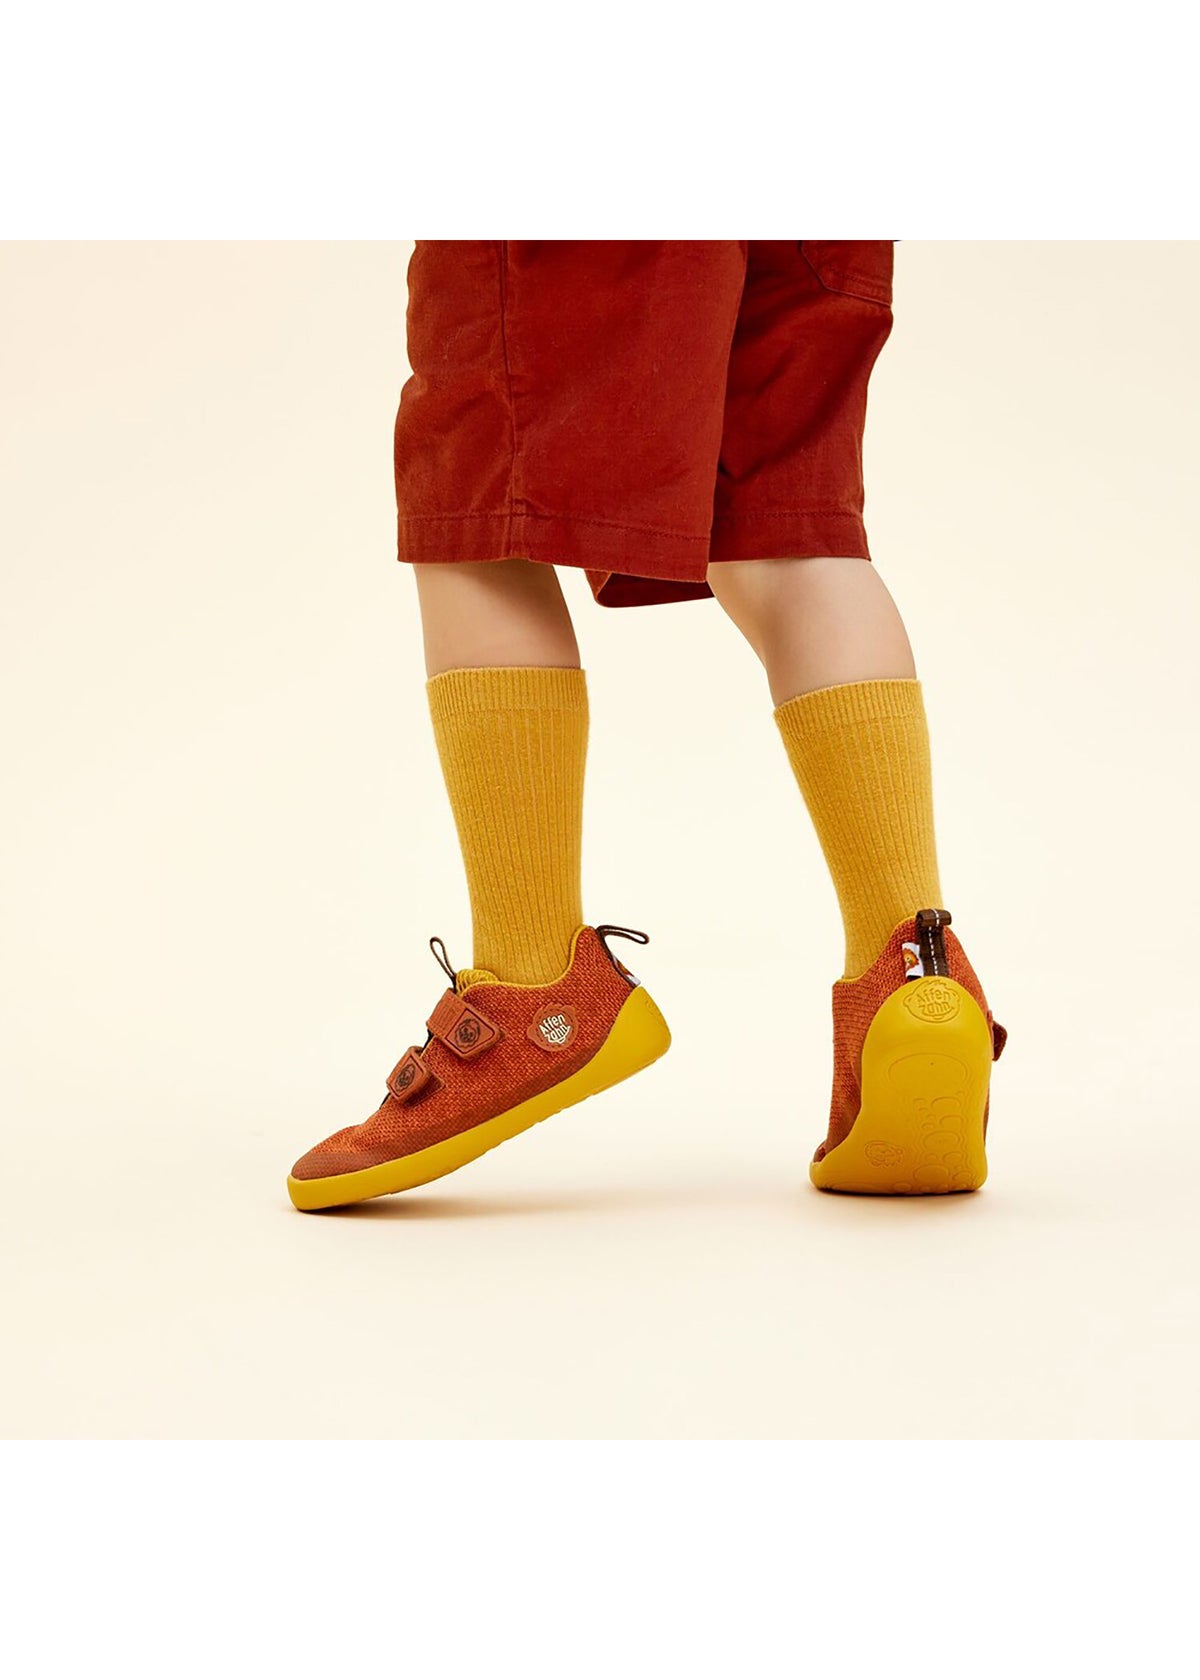 Barfotasneakers för barn - Knit Happy, Lion